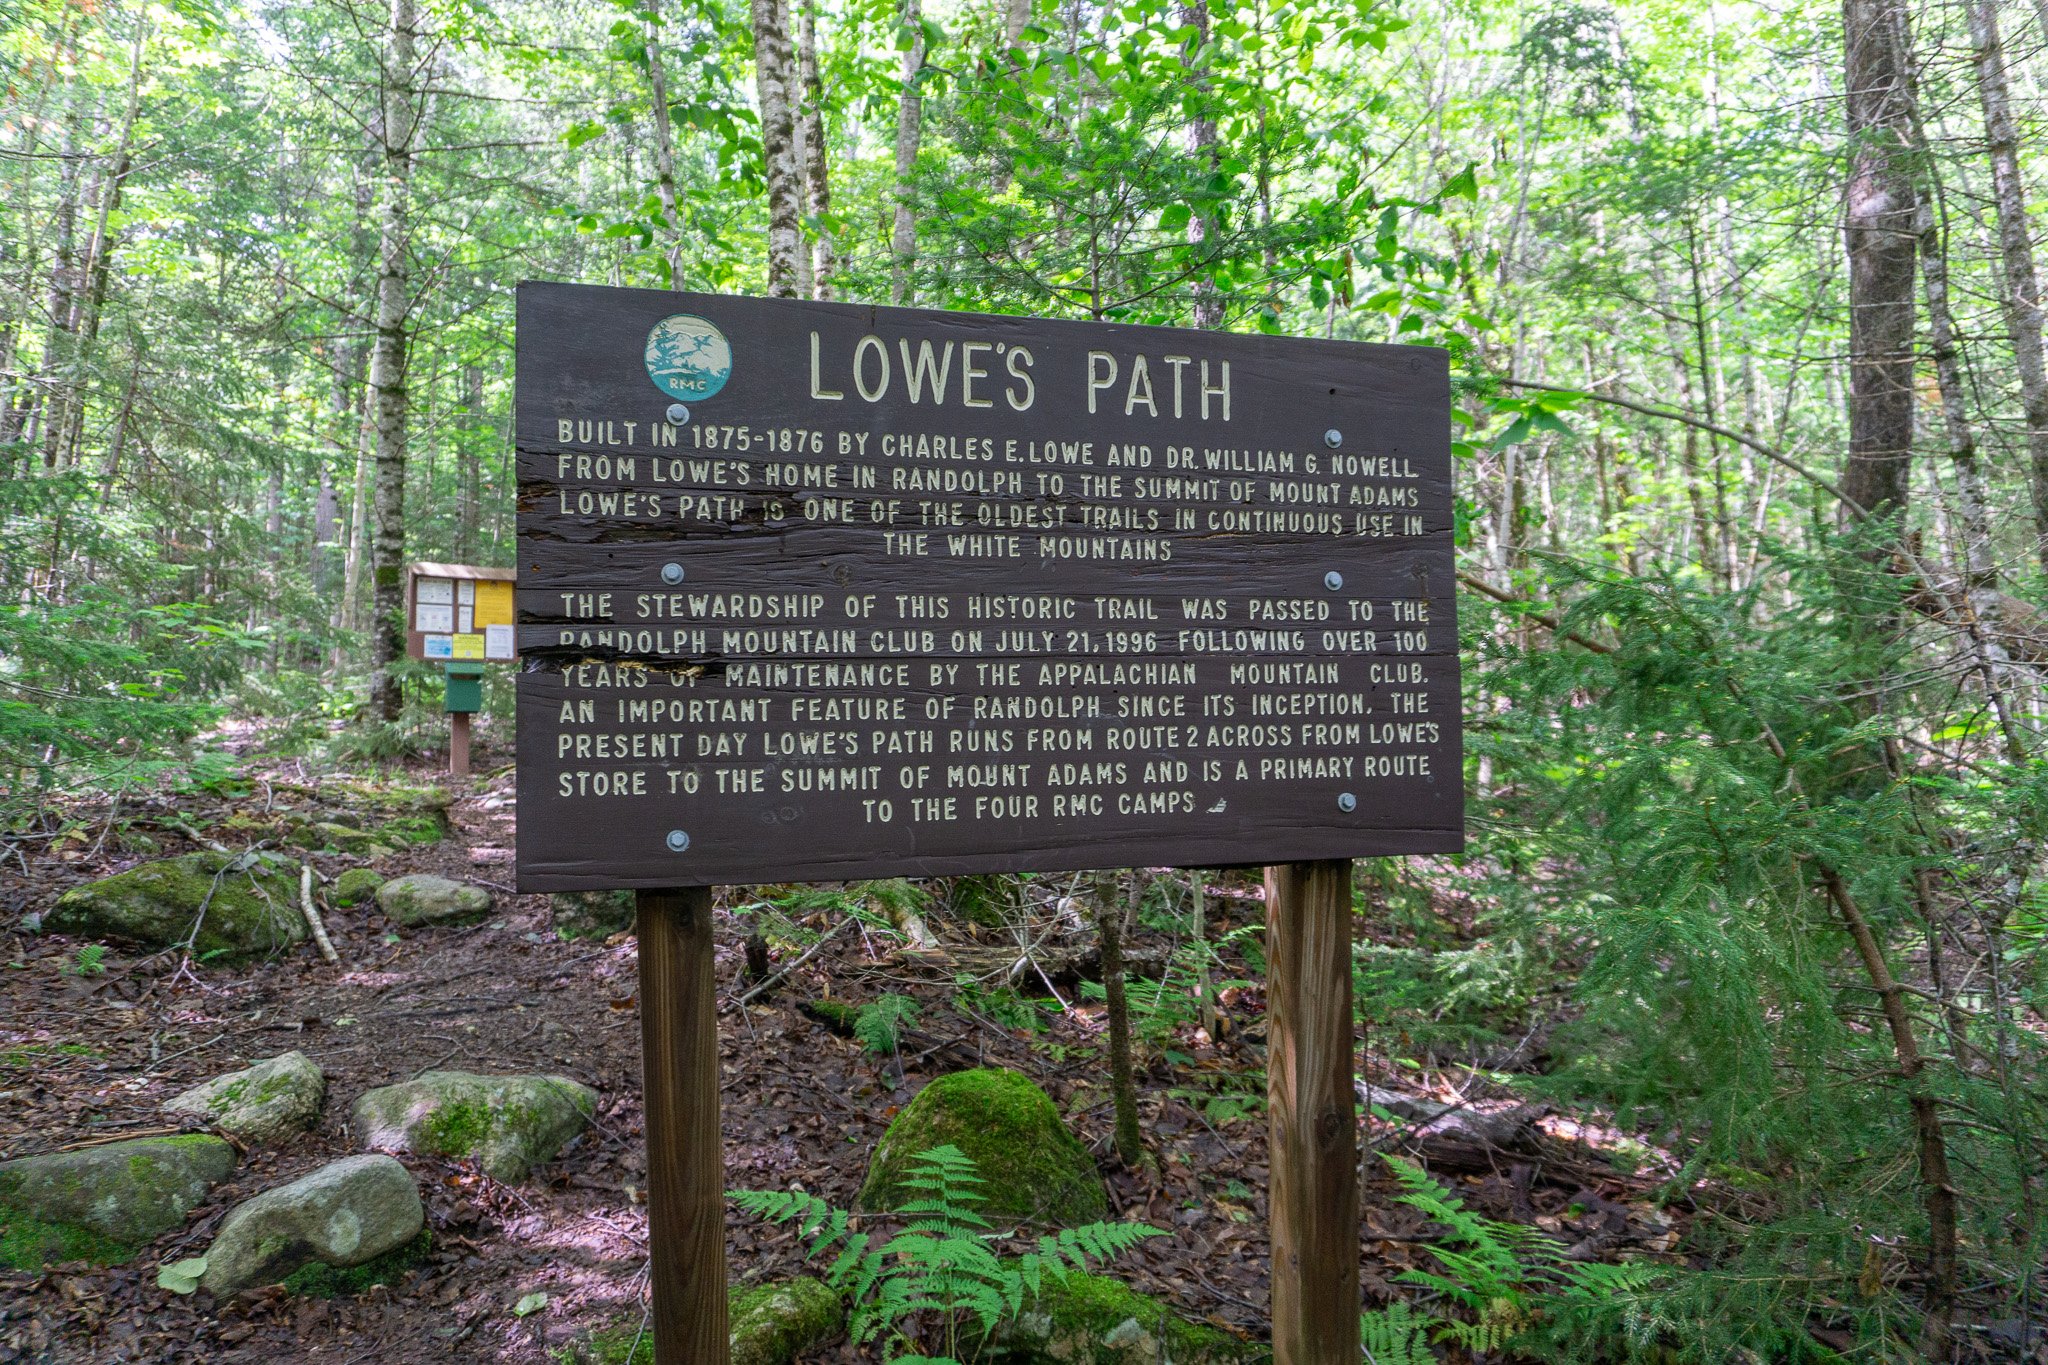 Alpha Guide: Hiking Lowe's Path